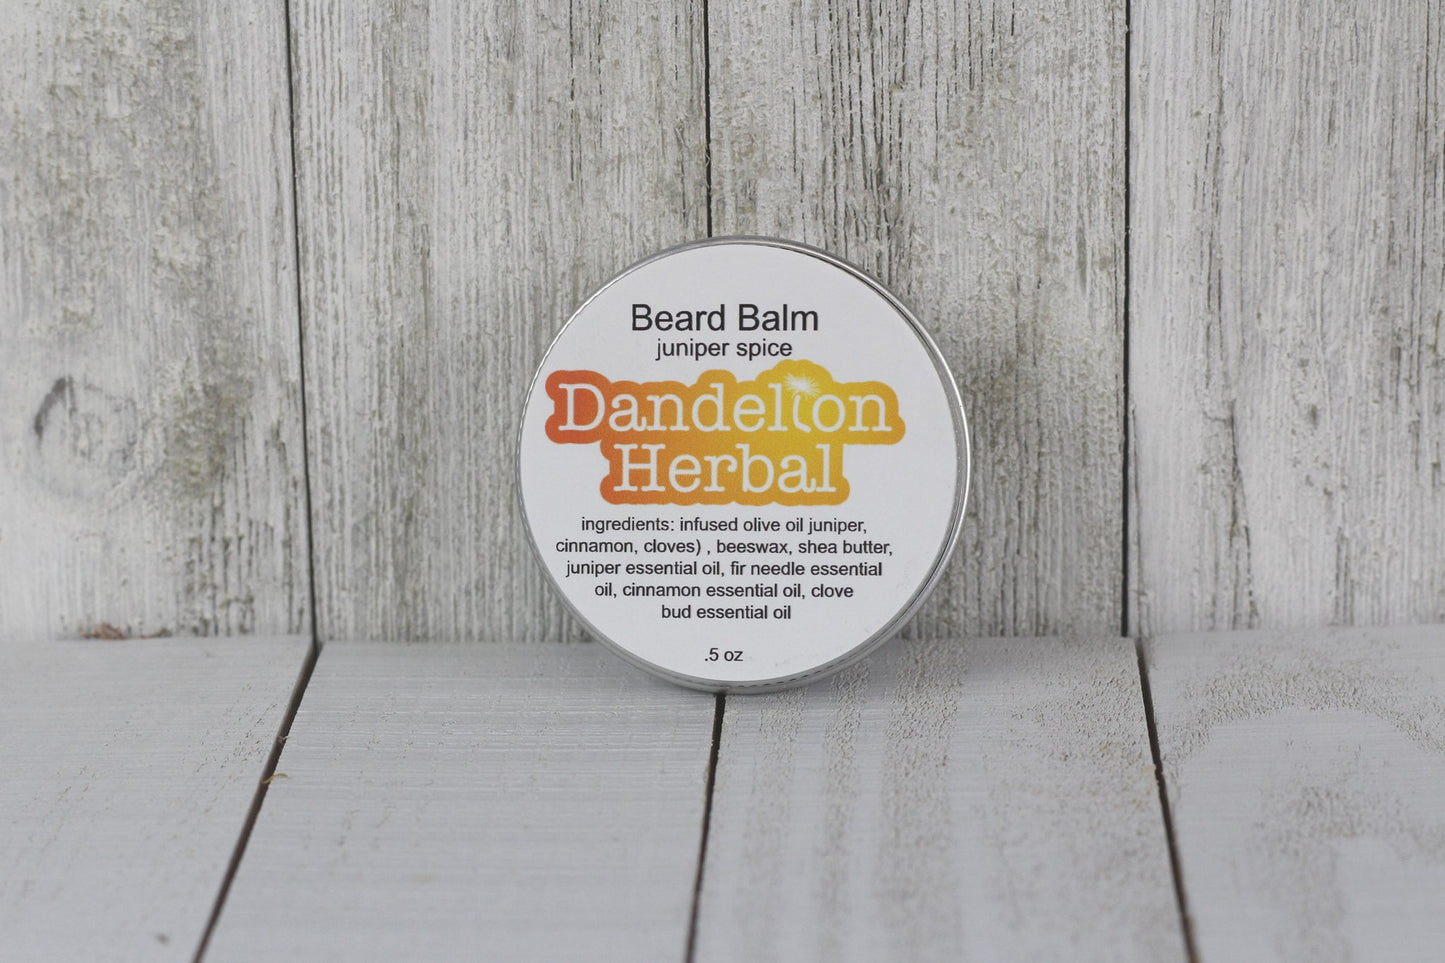 Dandelion Herbal - beard balm